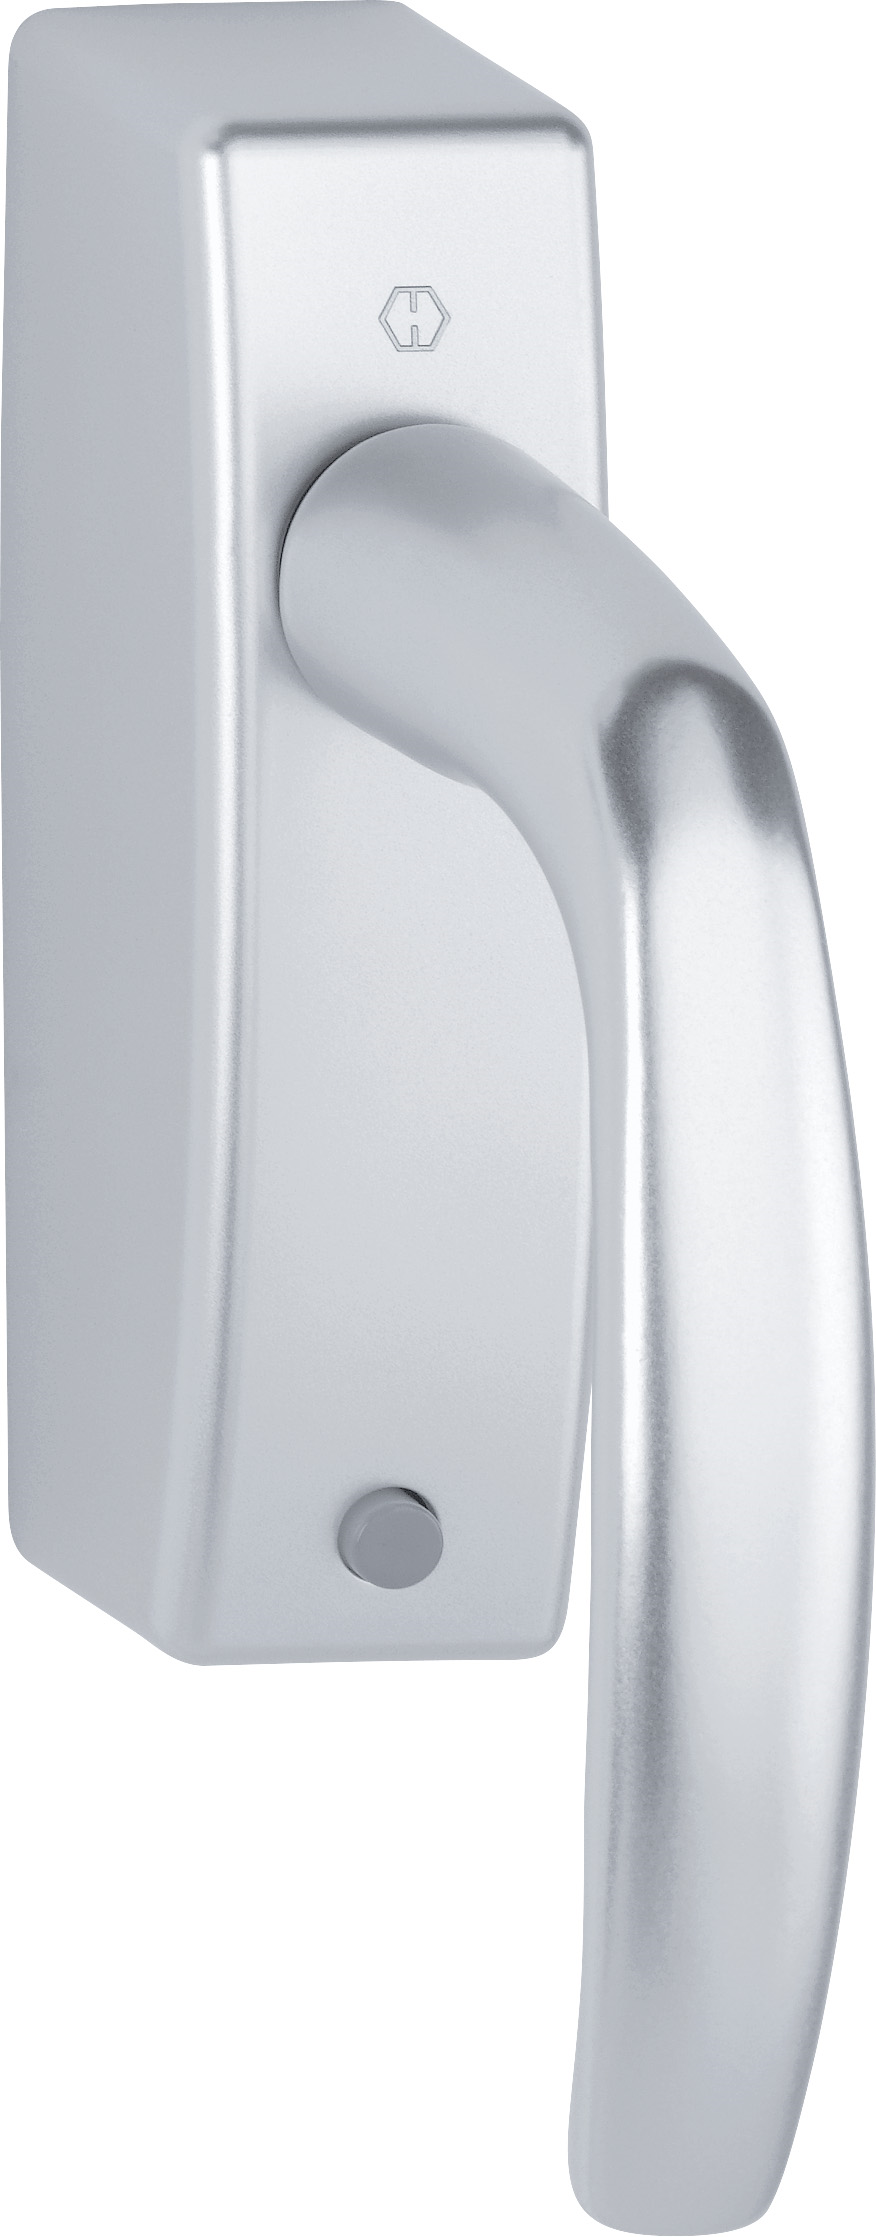 AutoLock eWindow handgreep Atlanta aluminium zilver, 43 mm pin, bidirectioneel